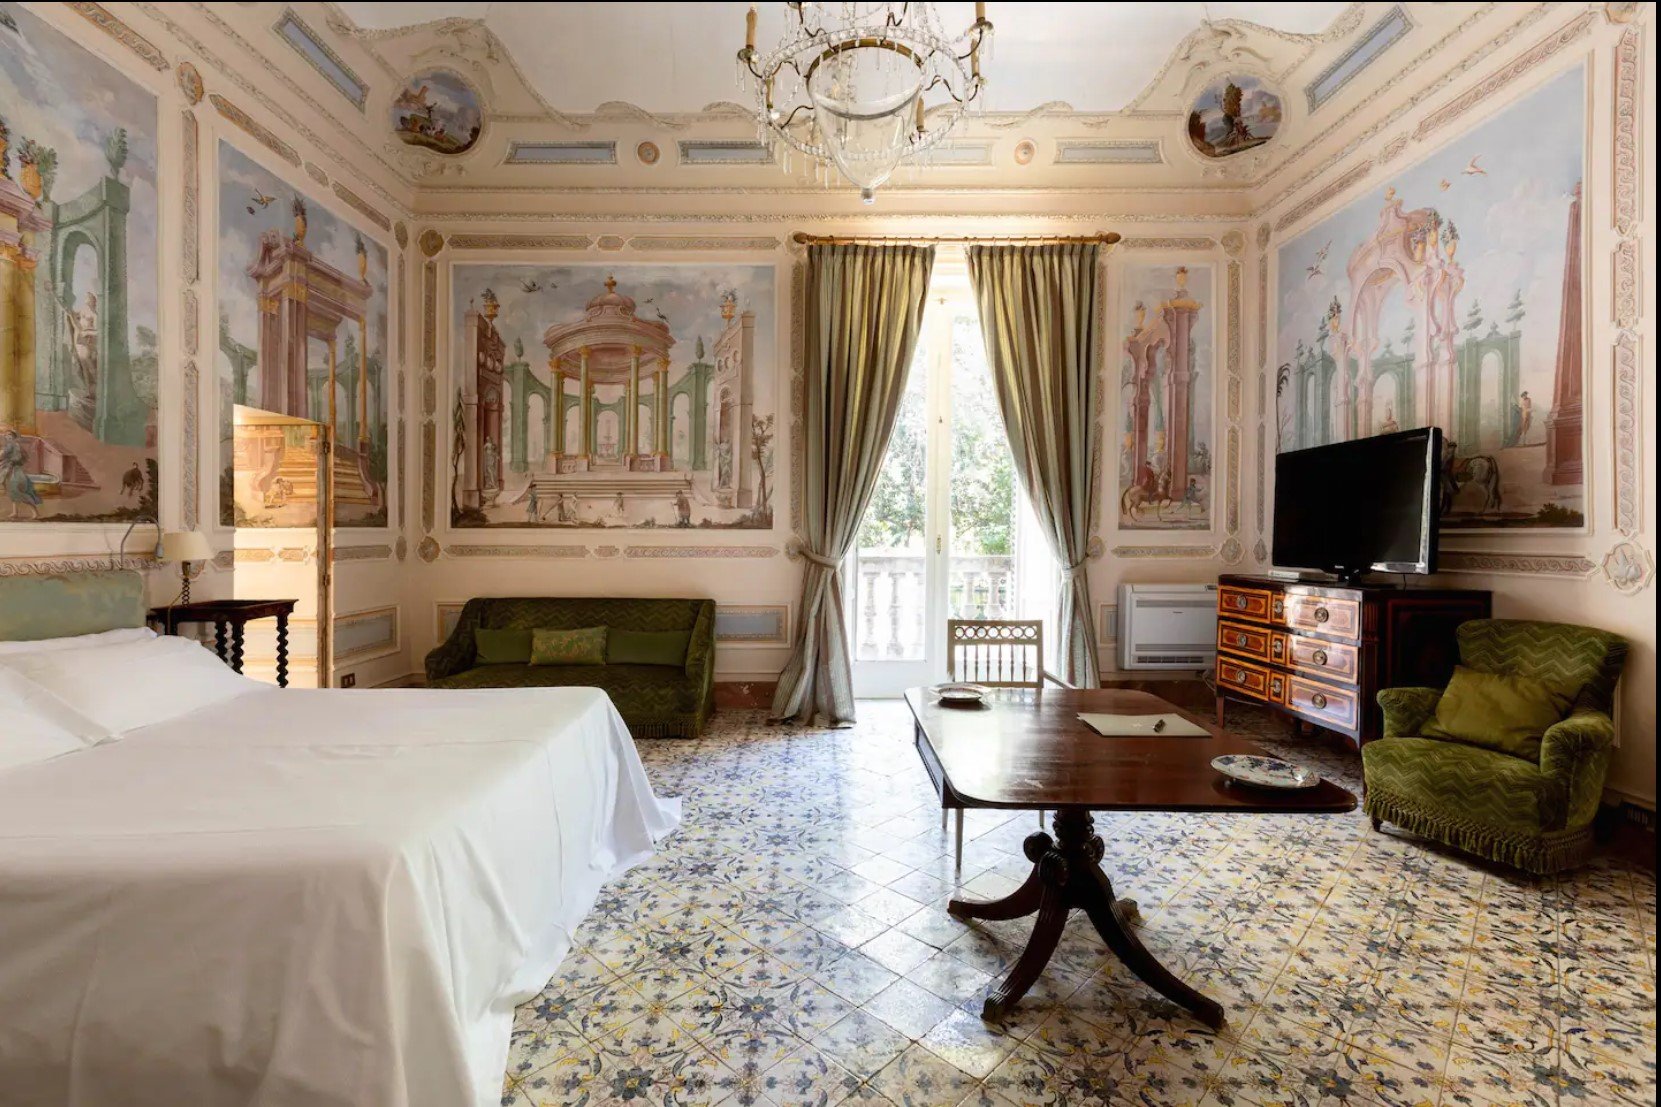 villa tasca white king bed with frescoes.jpg